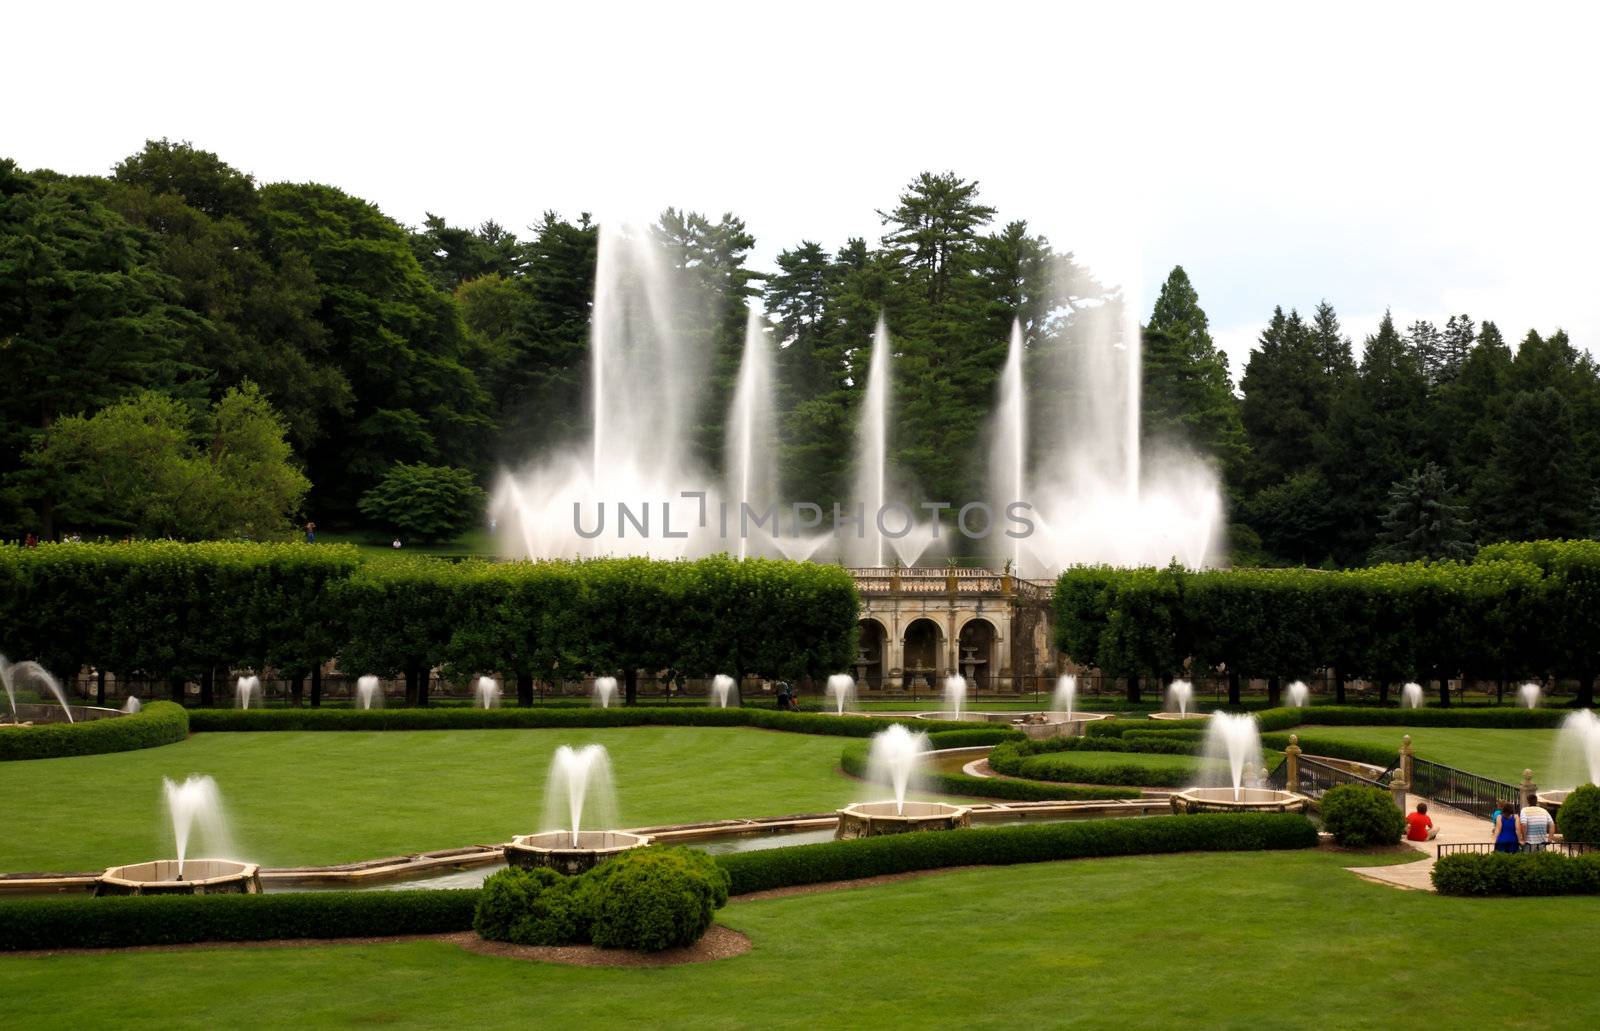 A fountain show in a botanical garden  by gary718